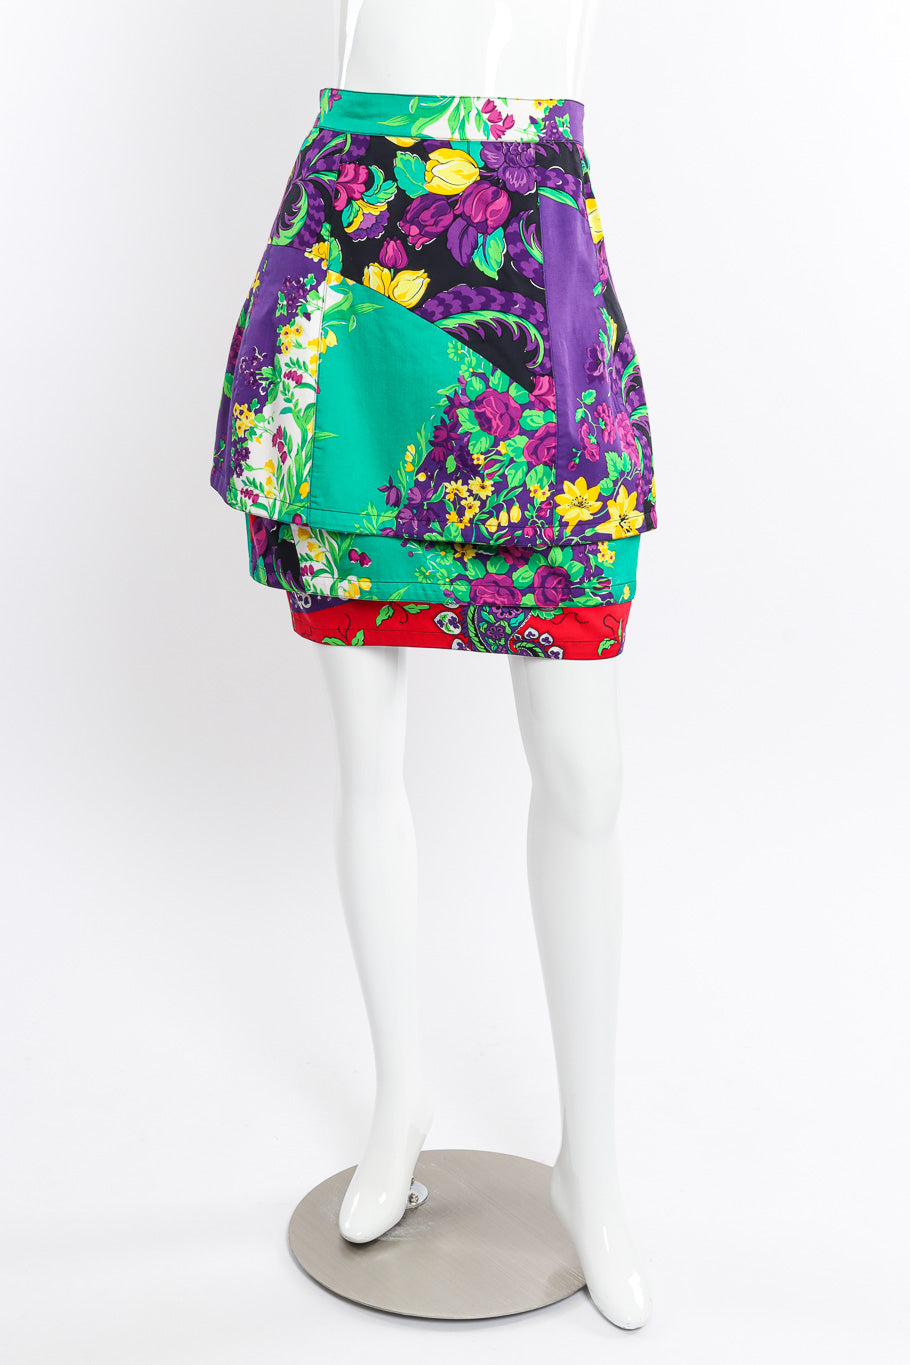 Vintage Gianni Versace Floral Cotton Tier Skirt front view on mannequin @Recessla